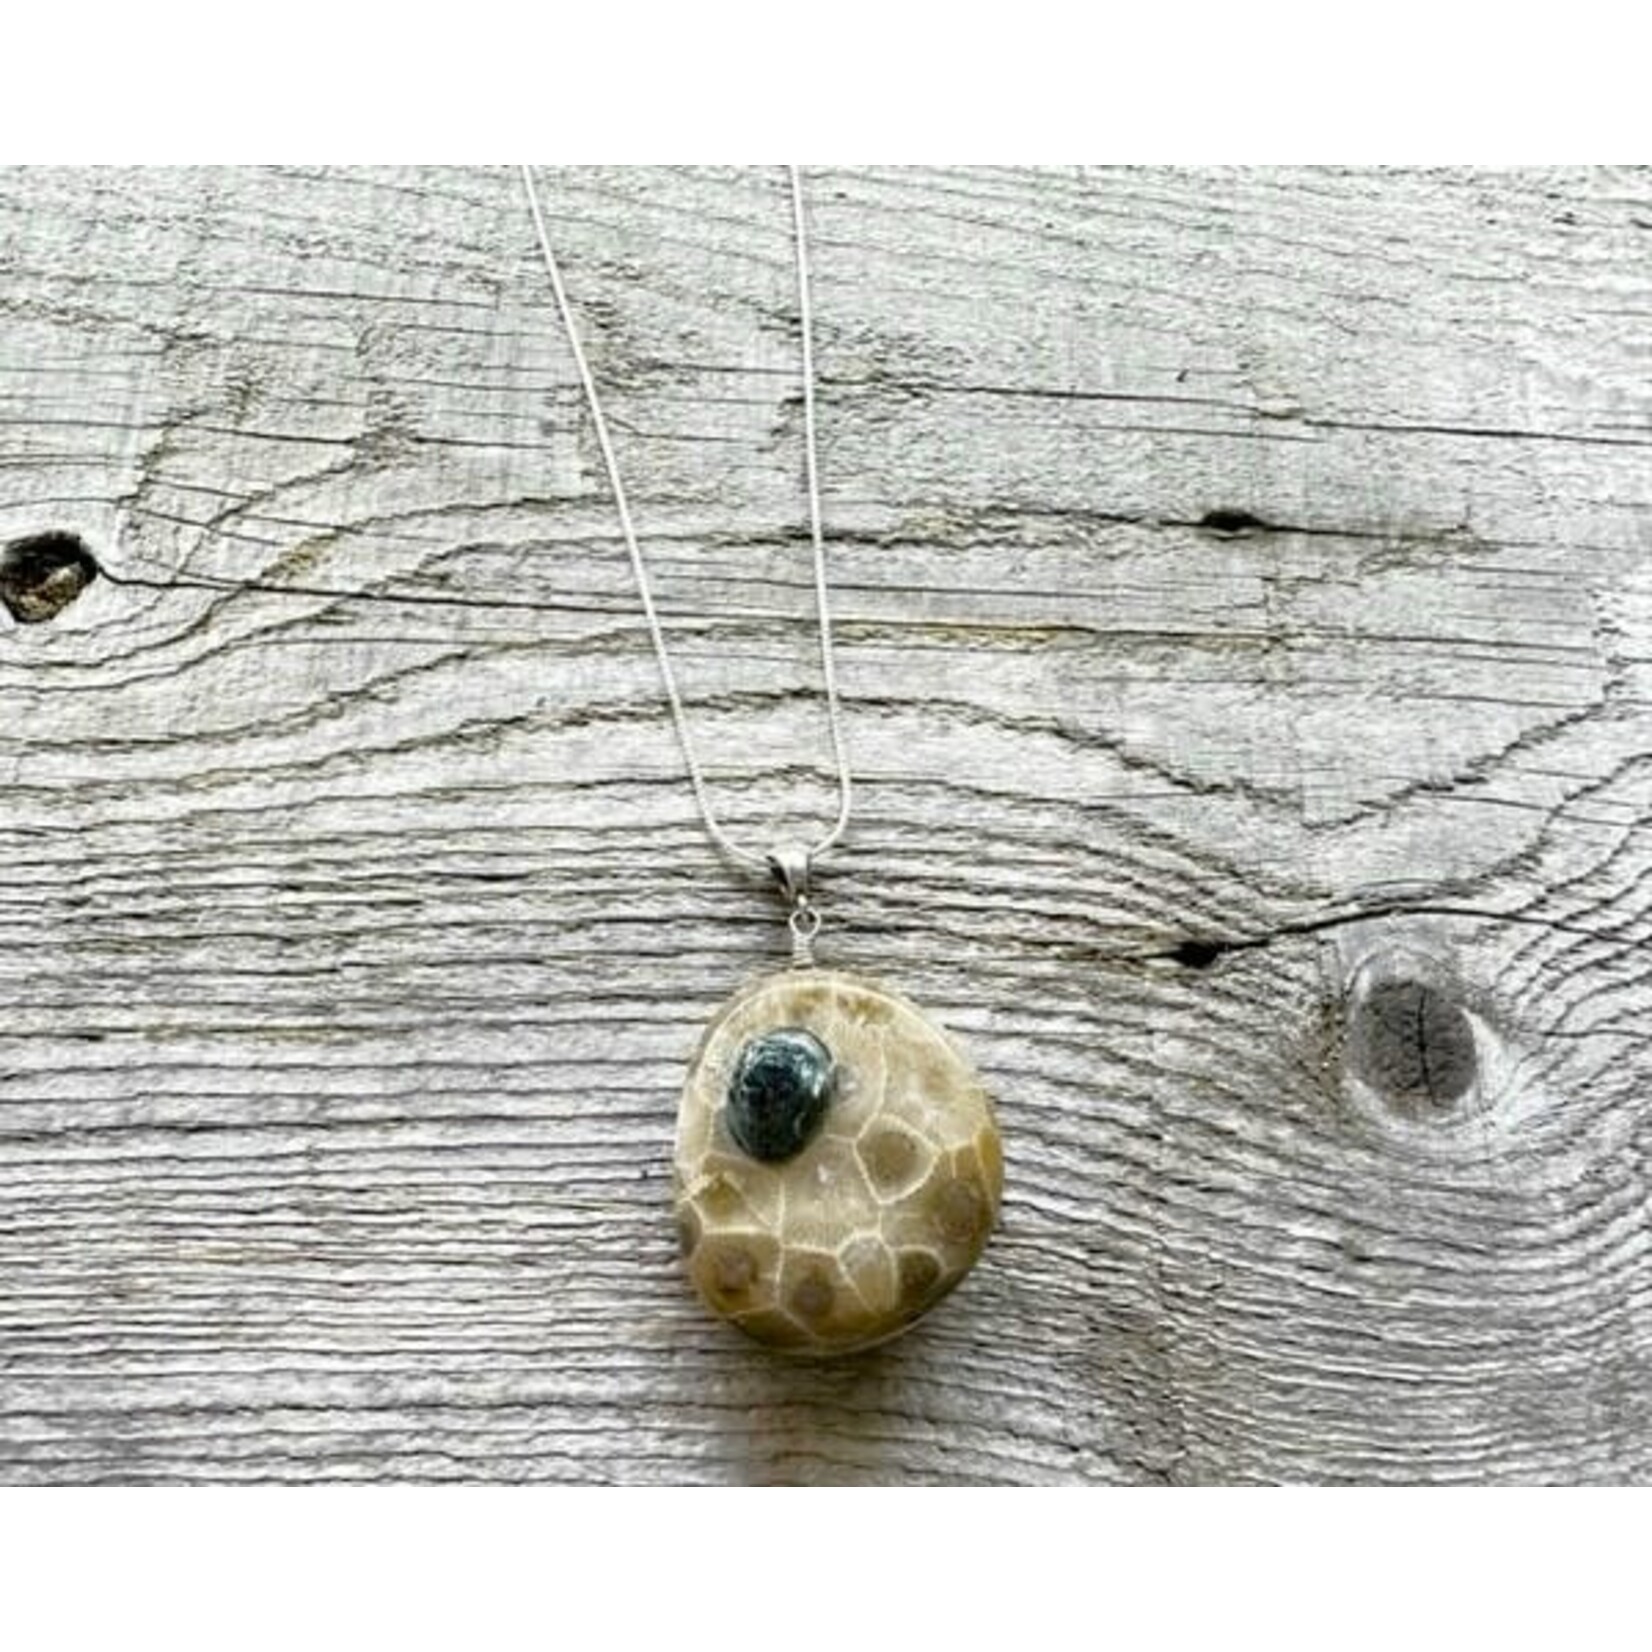 Necklace Pendant - Petoskey Stone w/Isle Royal Greenstone Accent